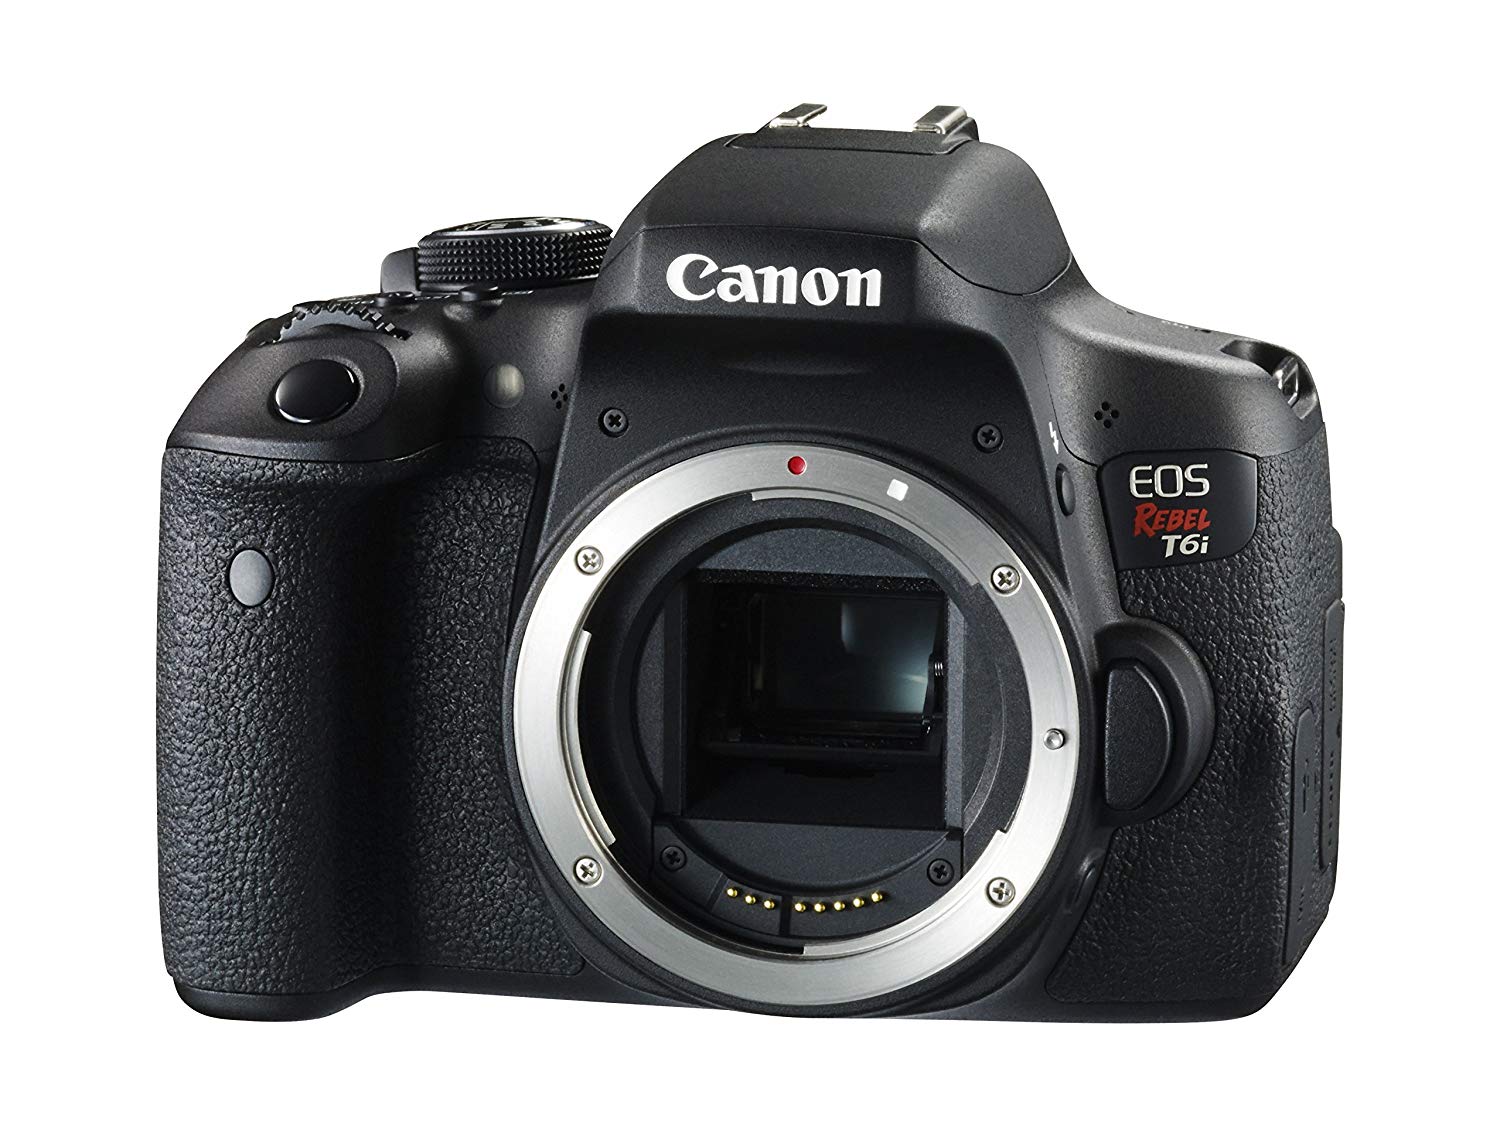 Canon Цифровая зеркальная фотокамера EOS Rebel T6i (только корпус) - Wi-Fi включен